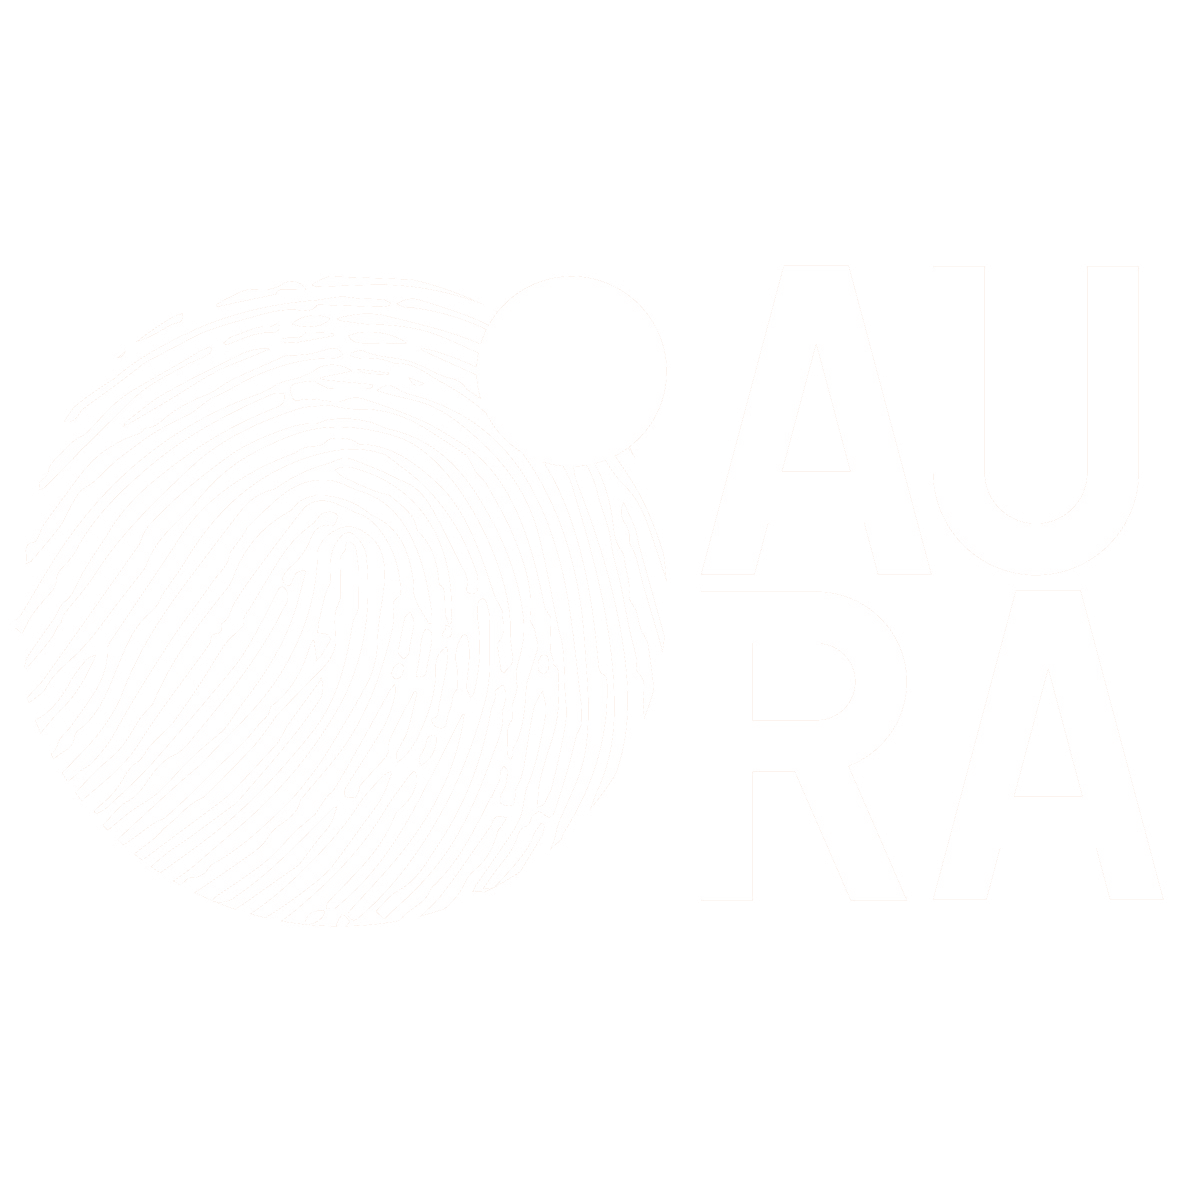 Team AuRA